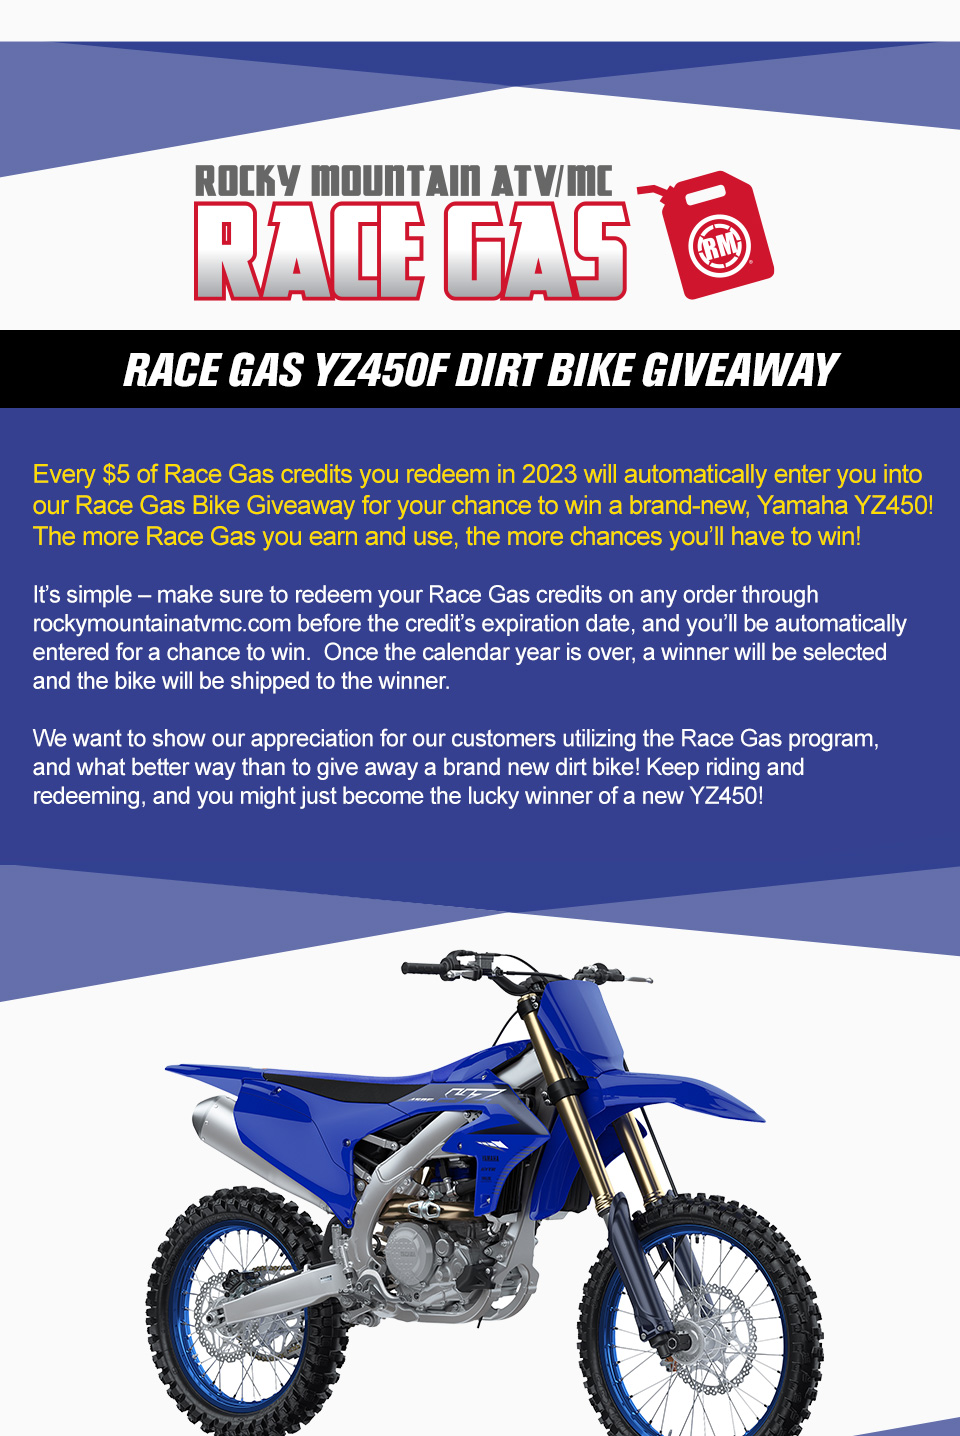 Race Gas Dirt Bike Giveaway Information